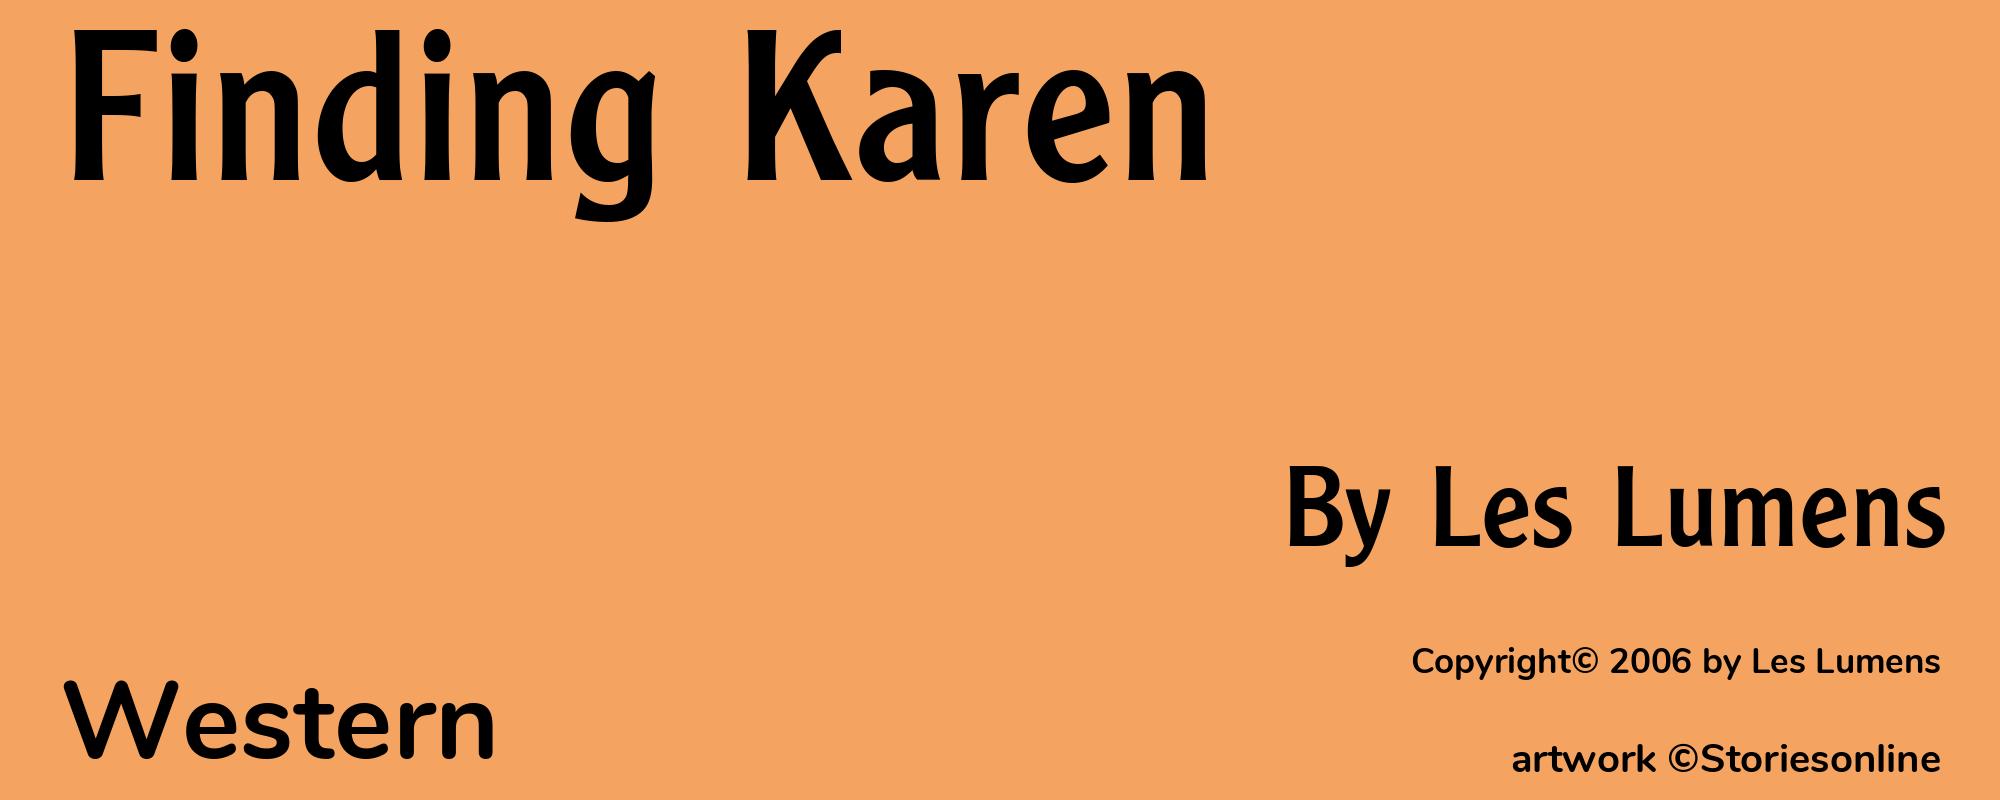 Finding Karen - Cover